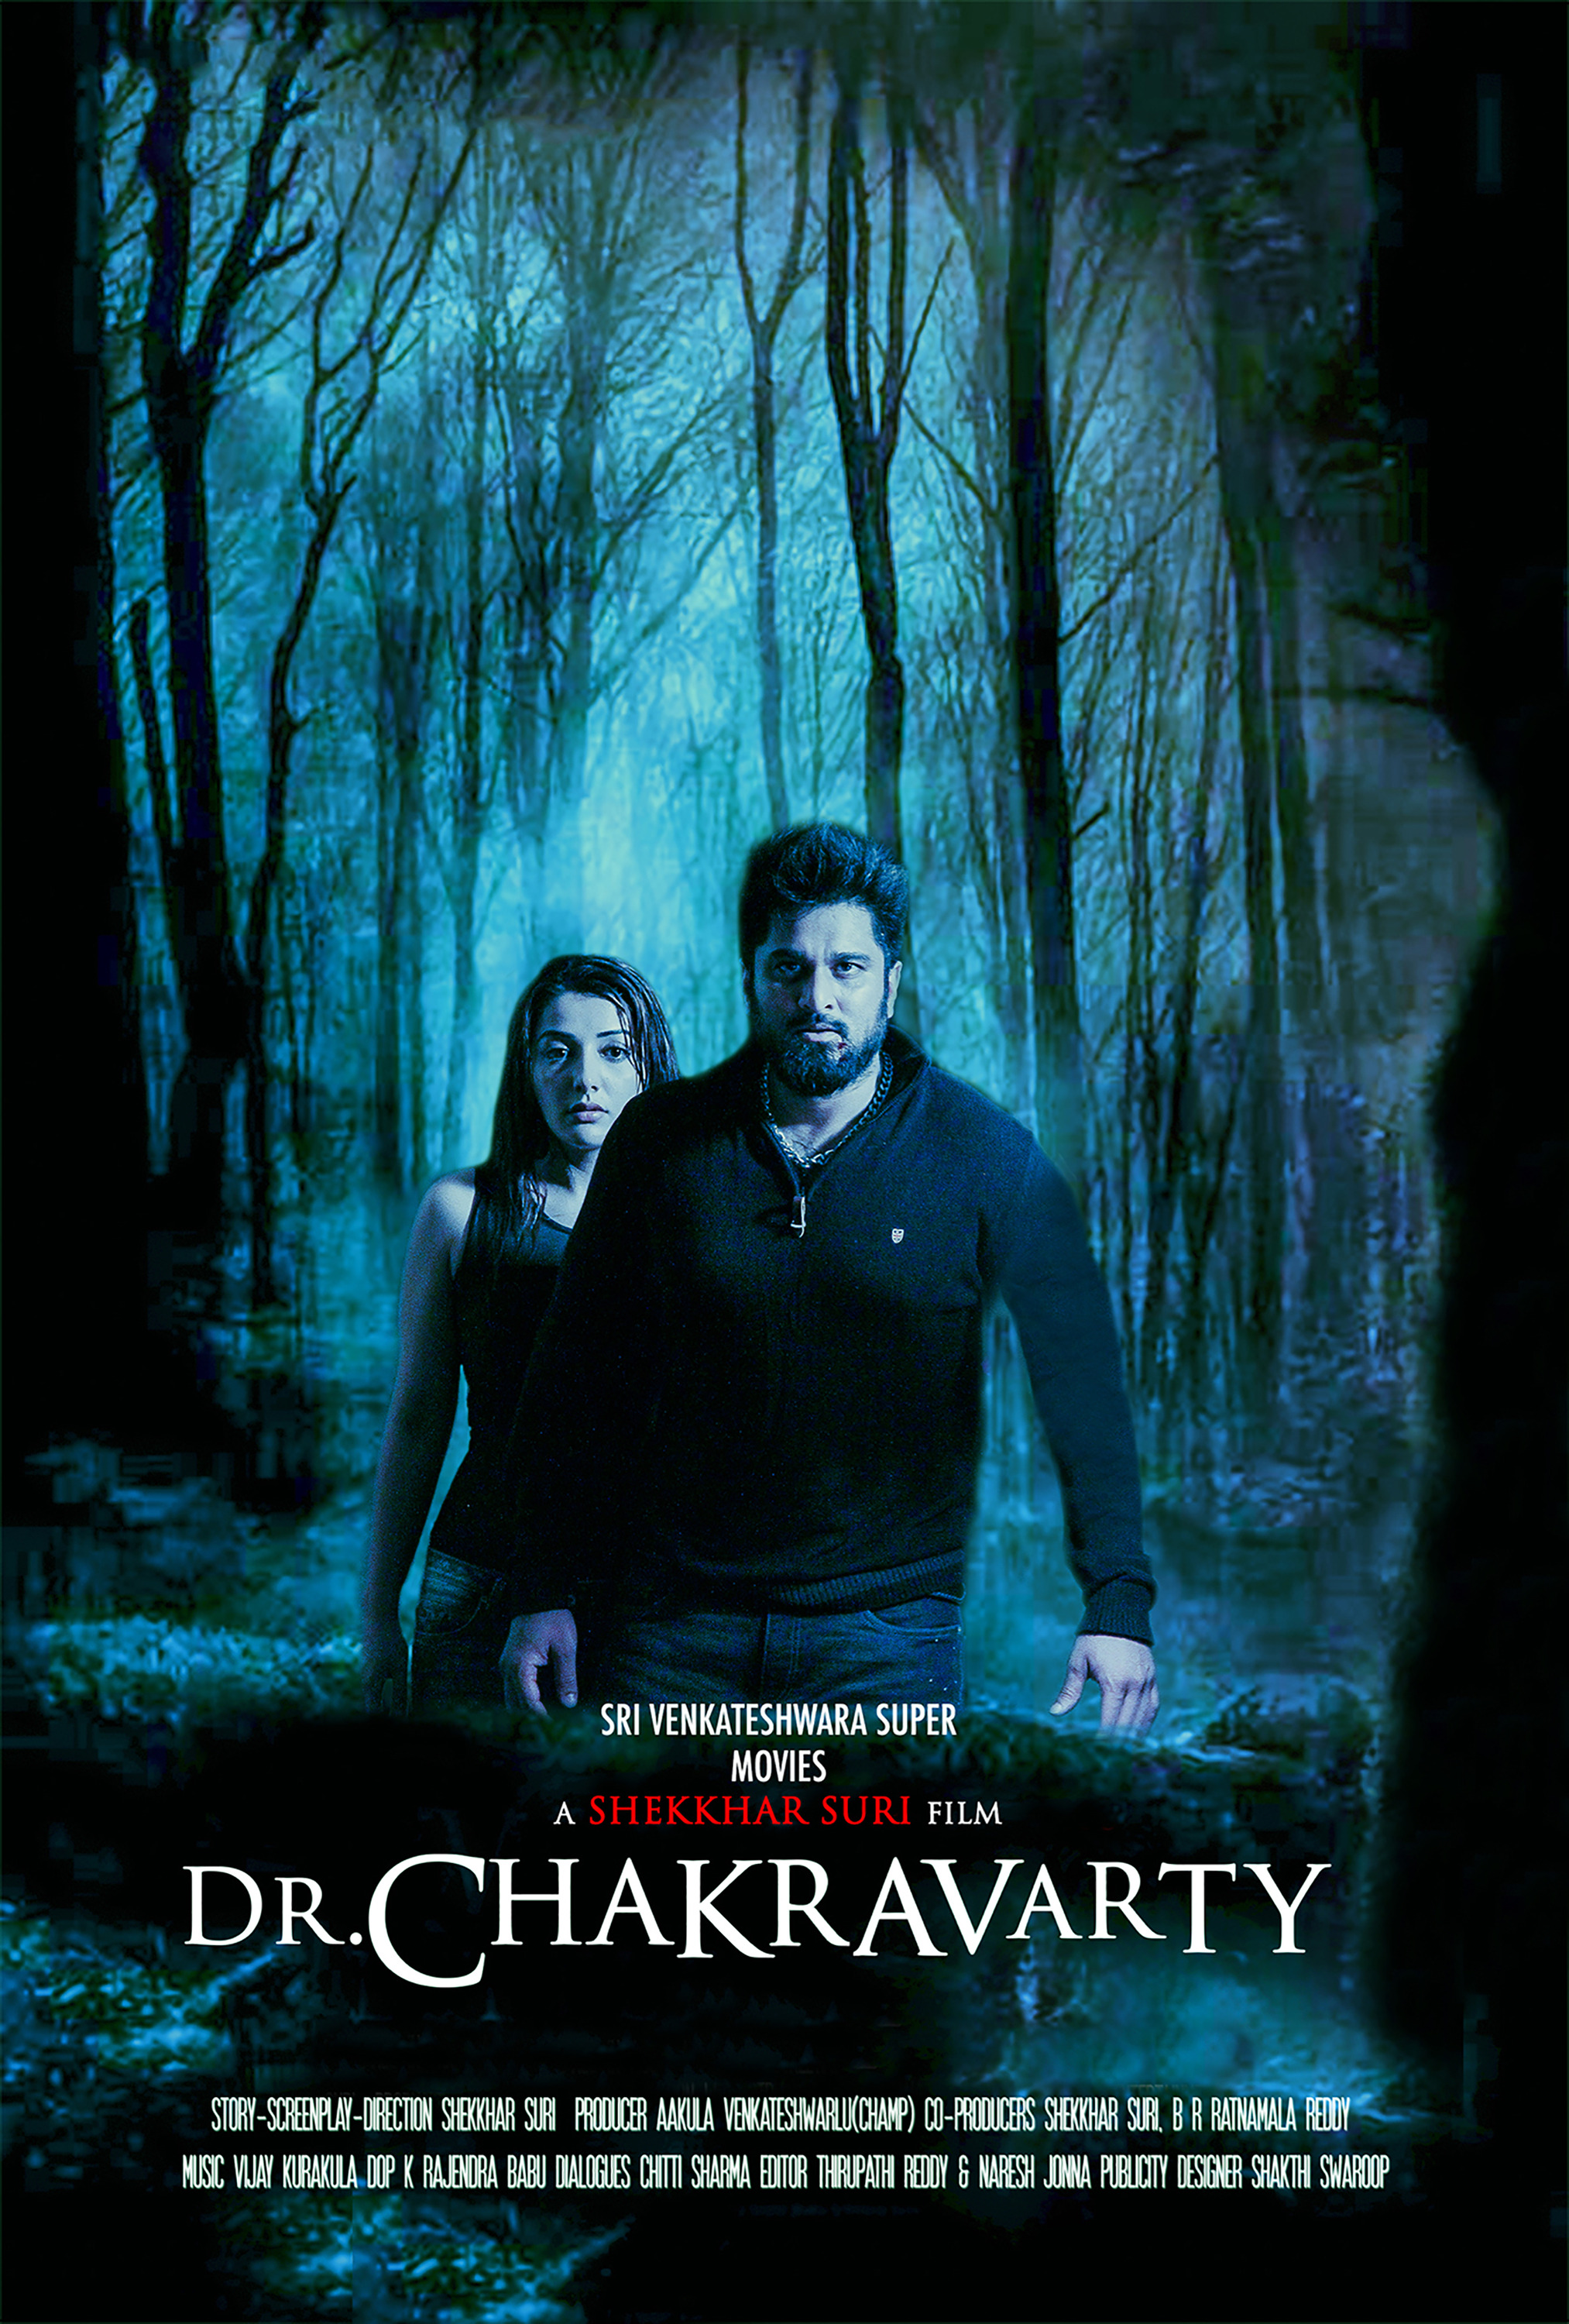 Mega Sized Movie Poster Image for Dr. Chakravarty (#13 of 14)